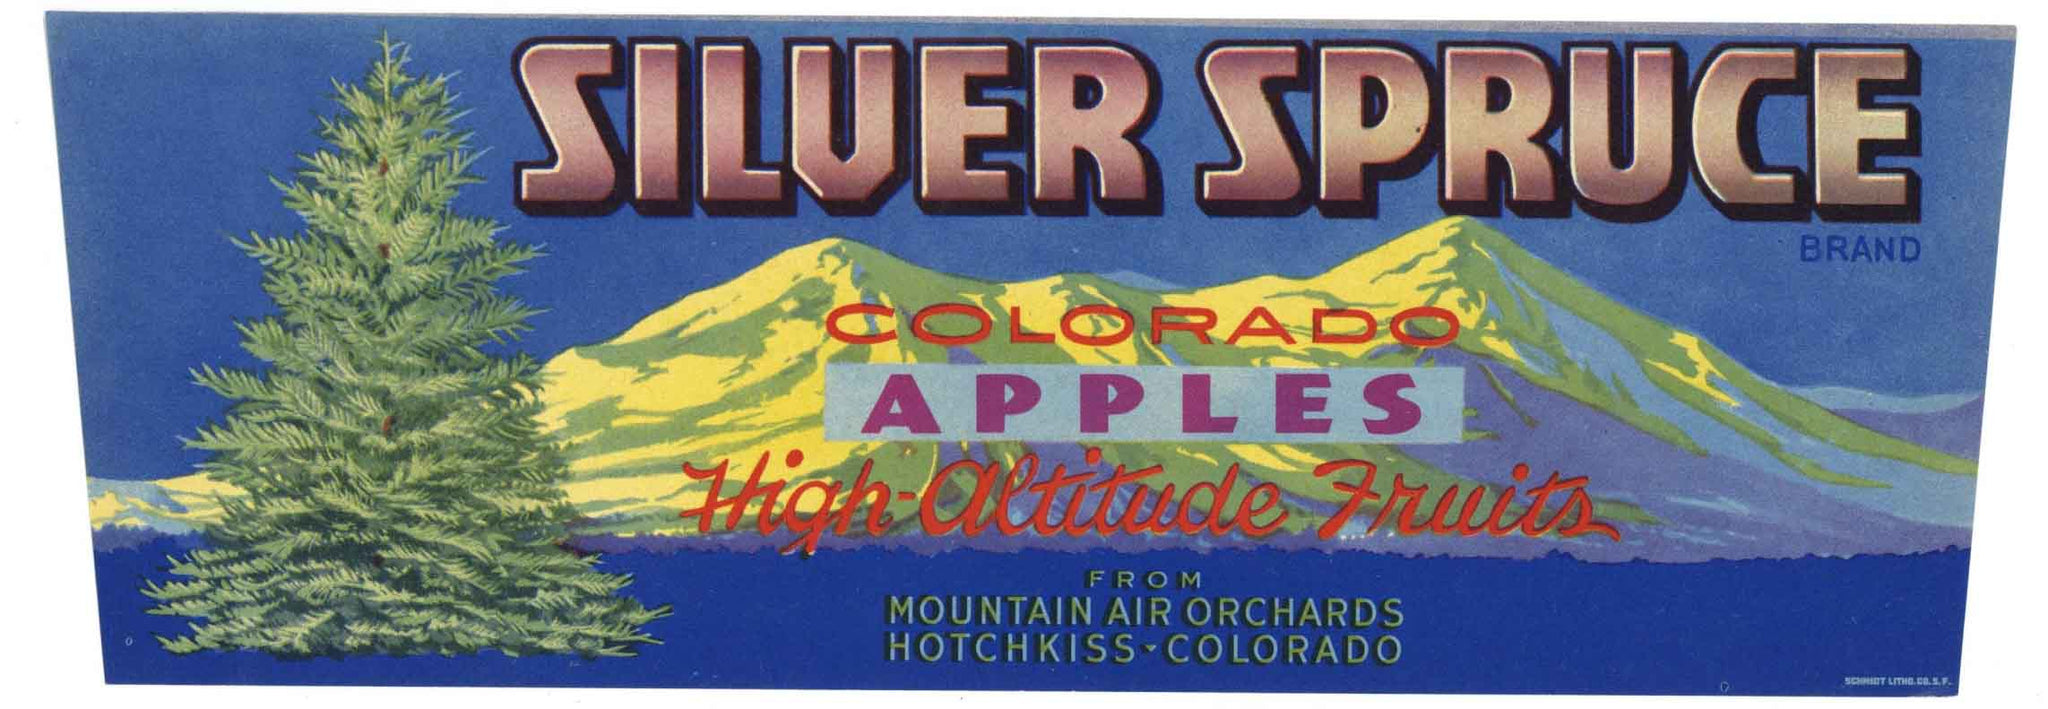 Silver Spruce Brand Vintage Colorado Apple Fruit Crate Label